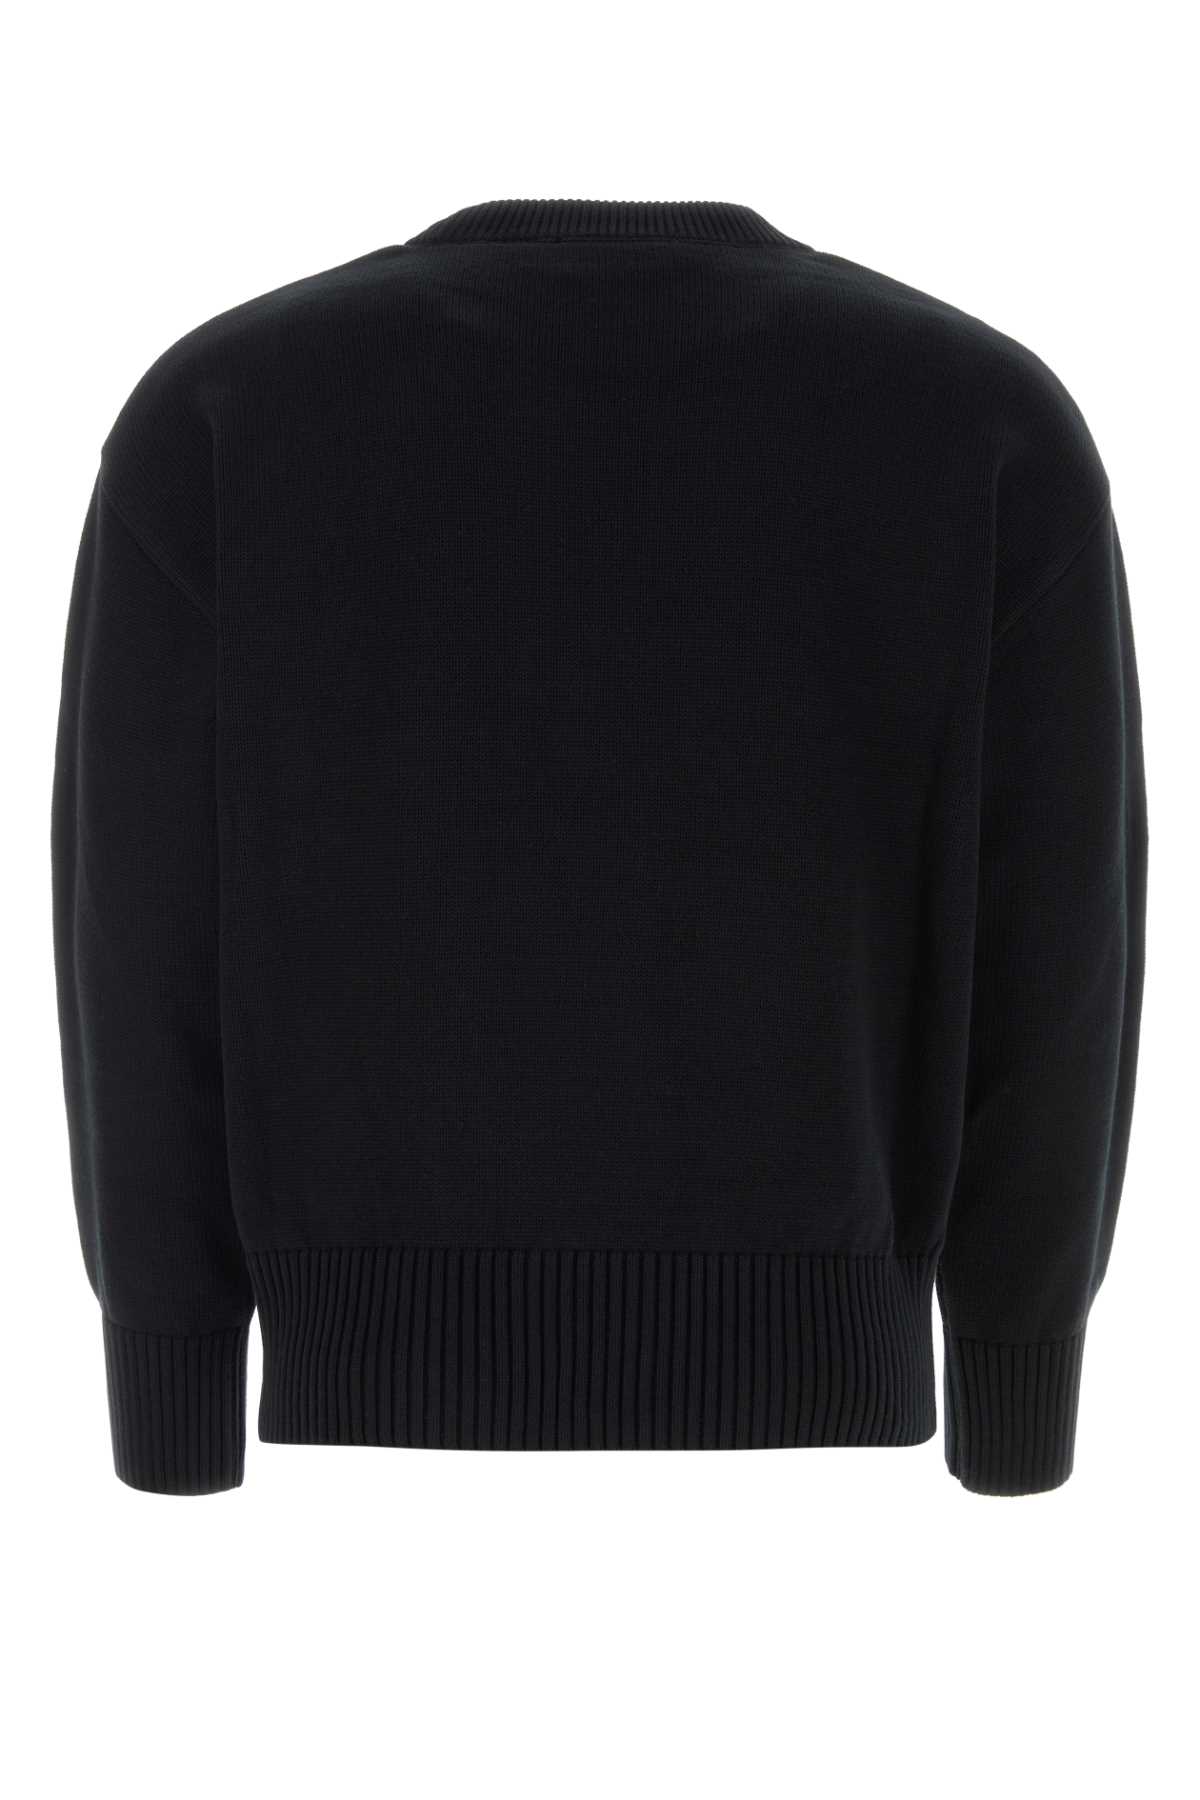 Shop Ami Alexandre Mattiussi Black Cotton Blend Sweater